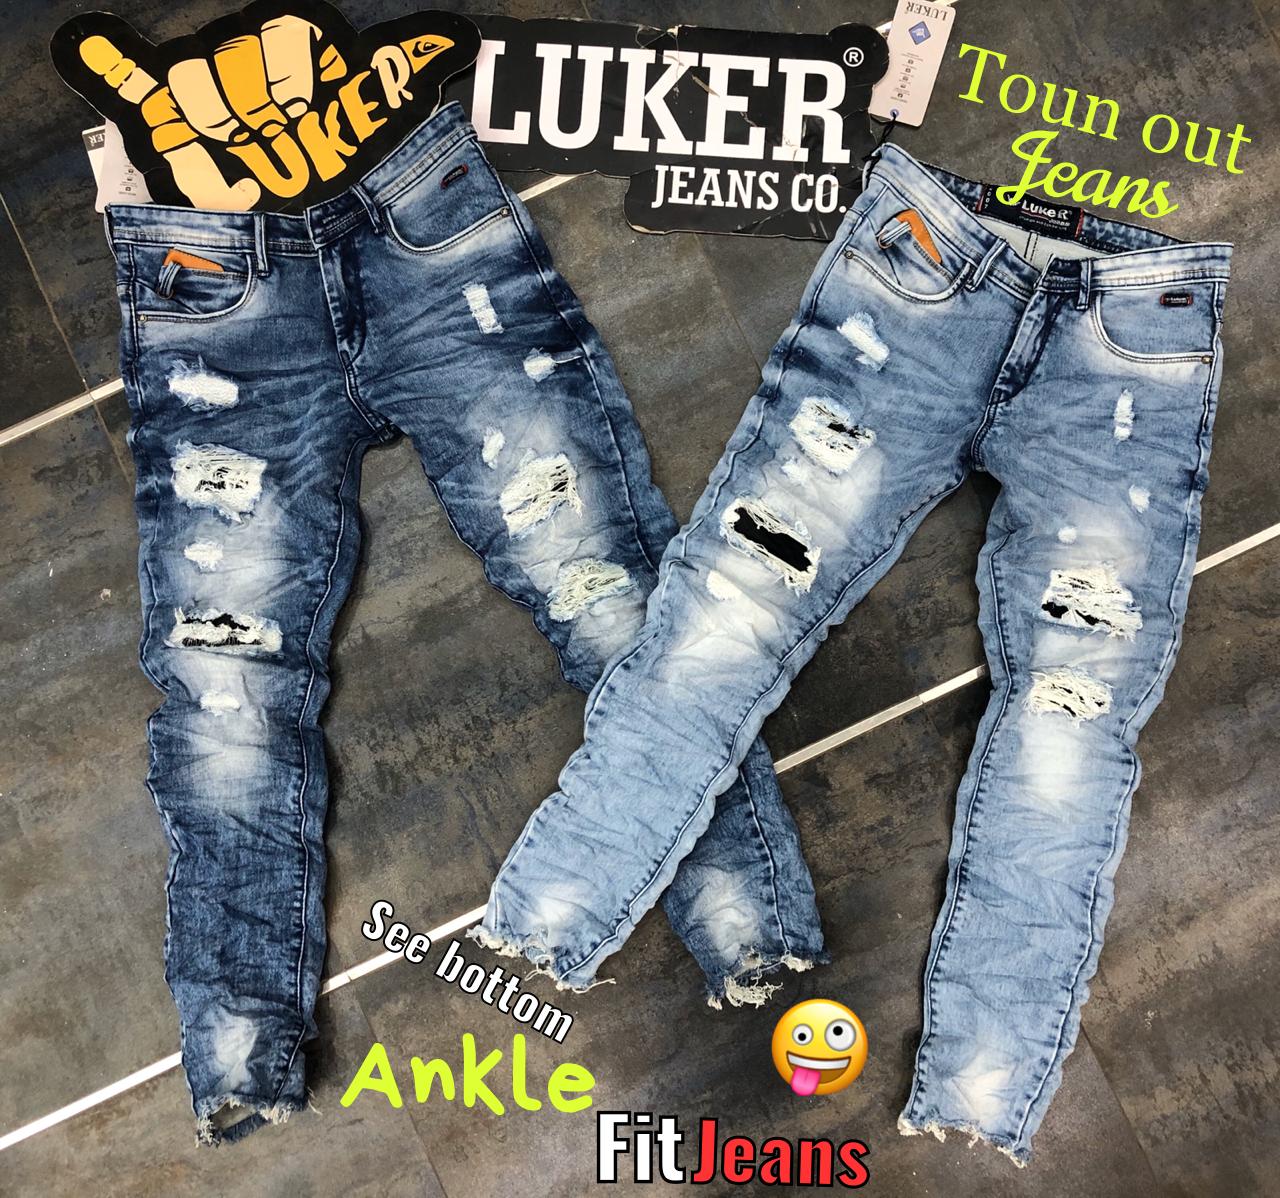 luker jeans price